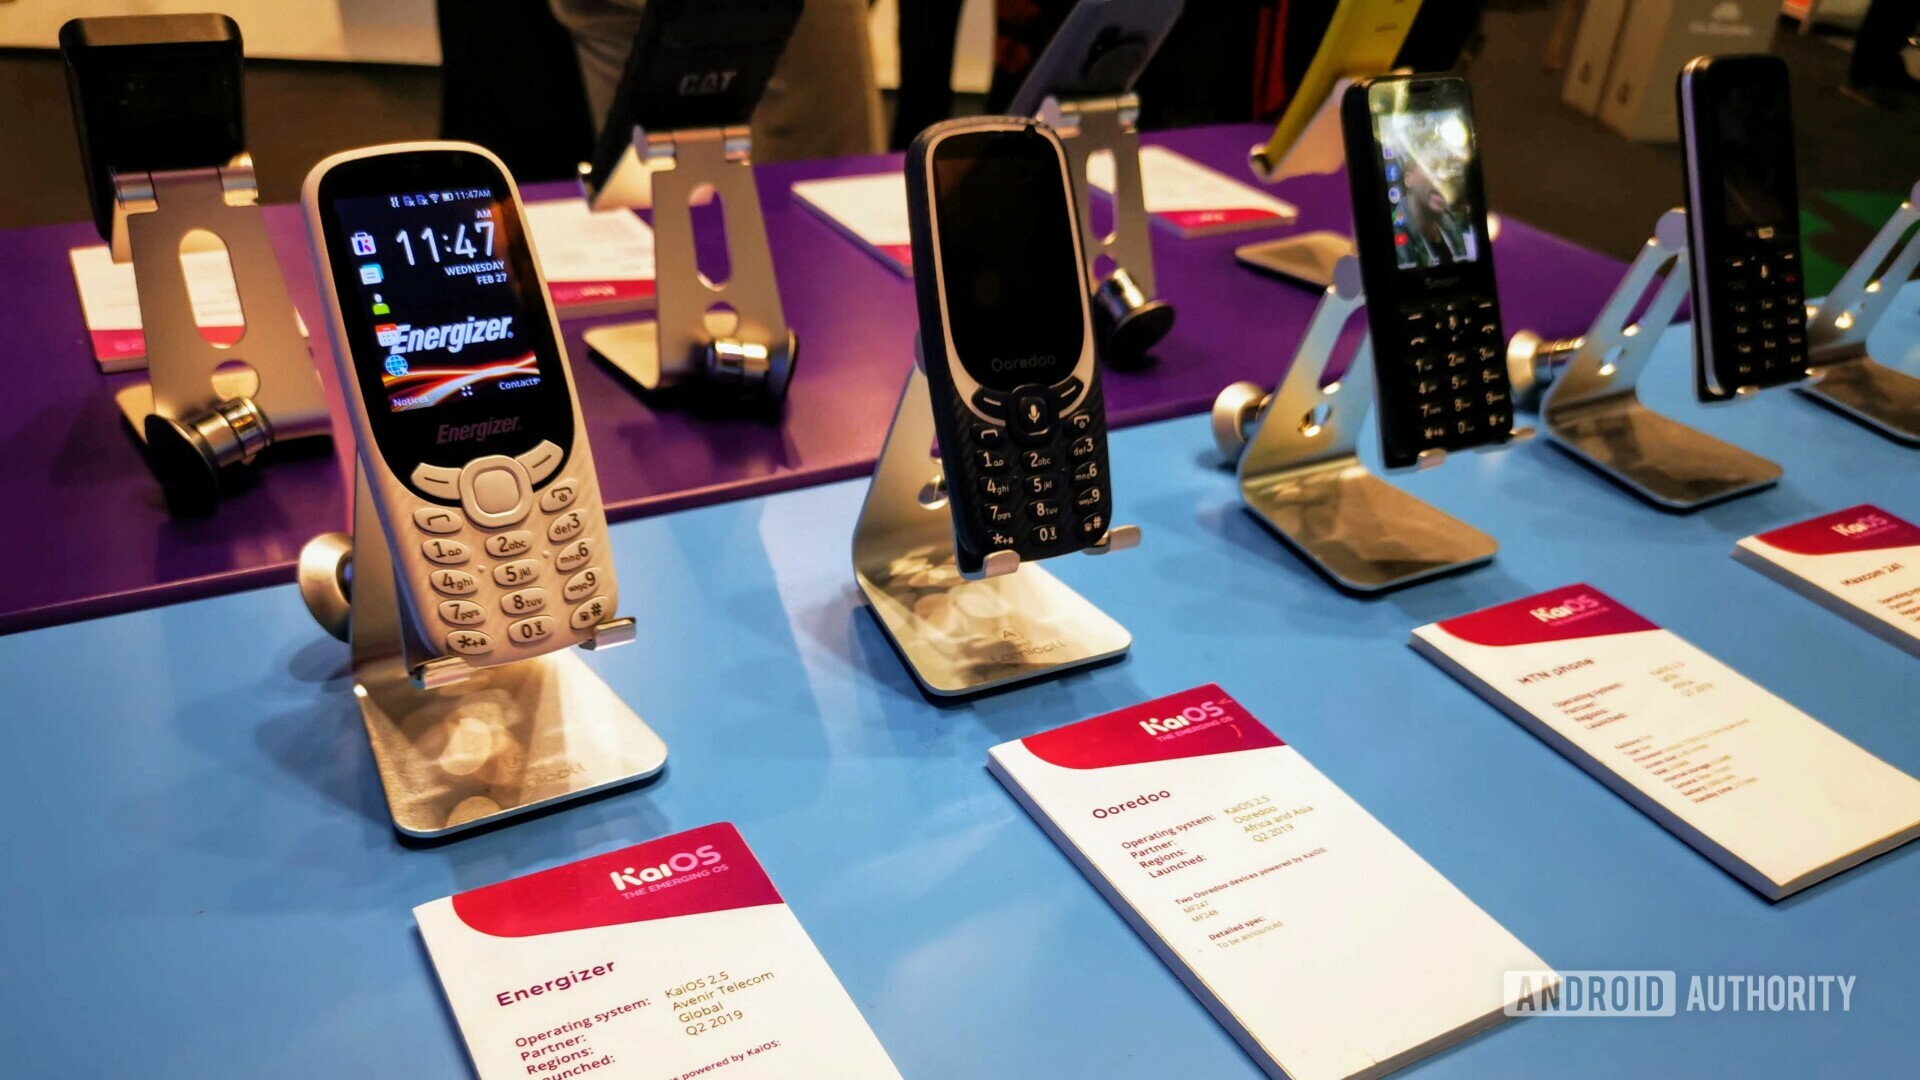 KaiOS phones at MWC 2019.